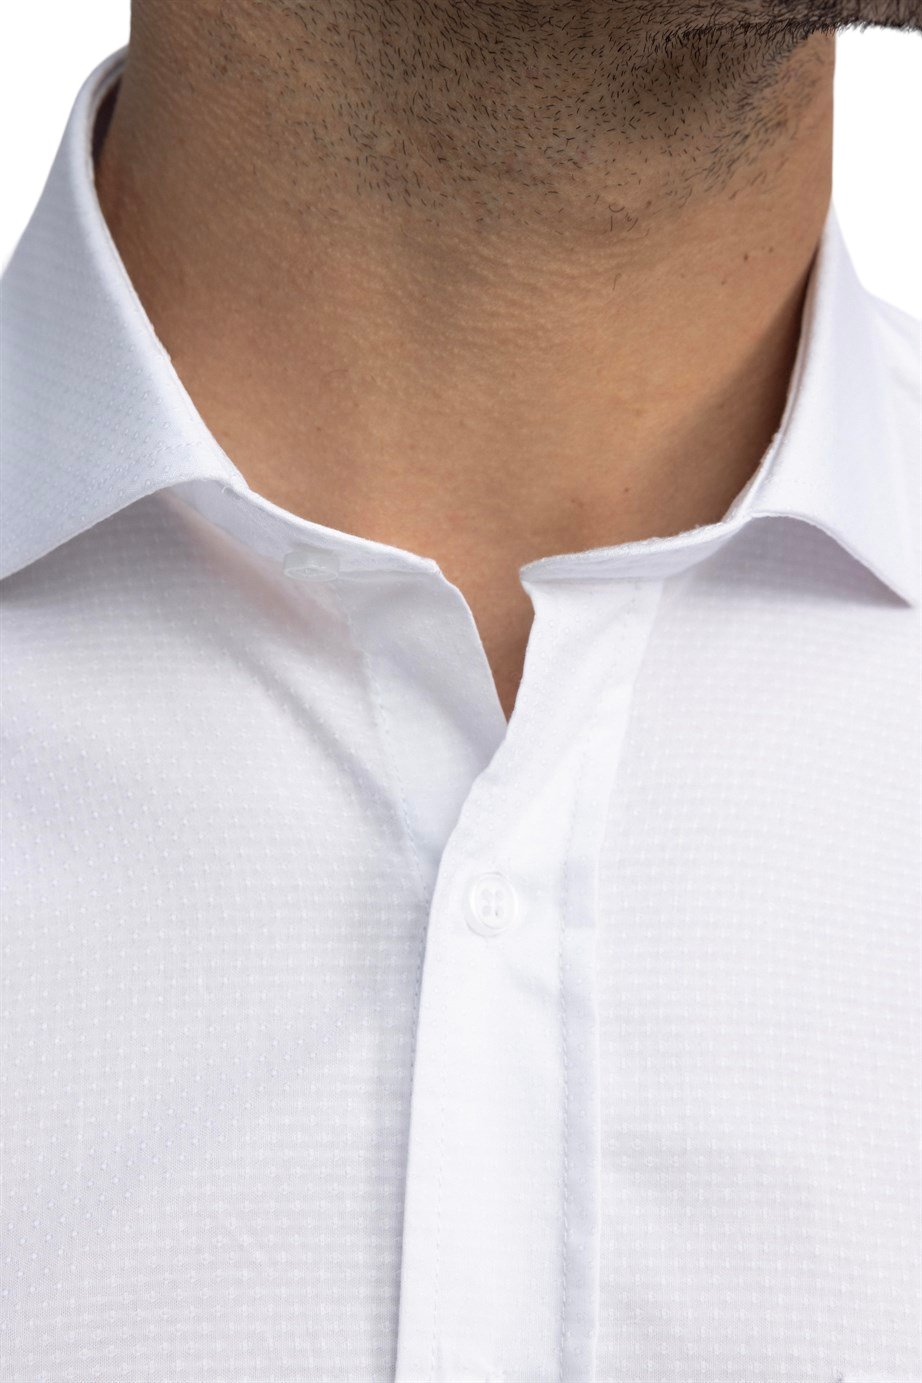 Classic Fit White Long Sleeve Cotton Texture Shirt 99percenthandmade   